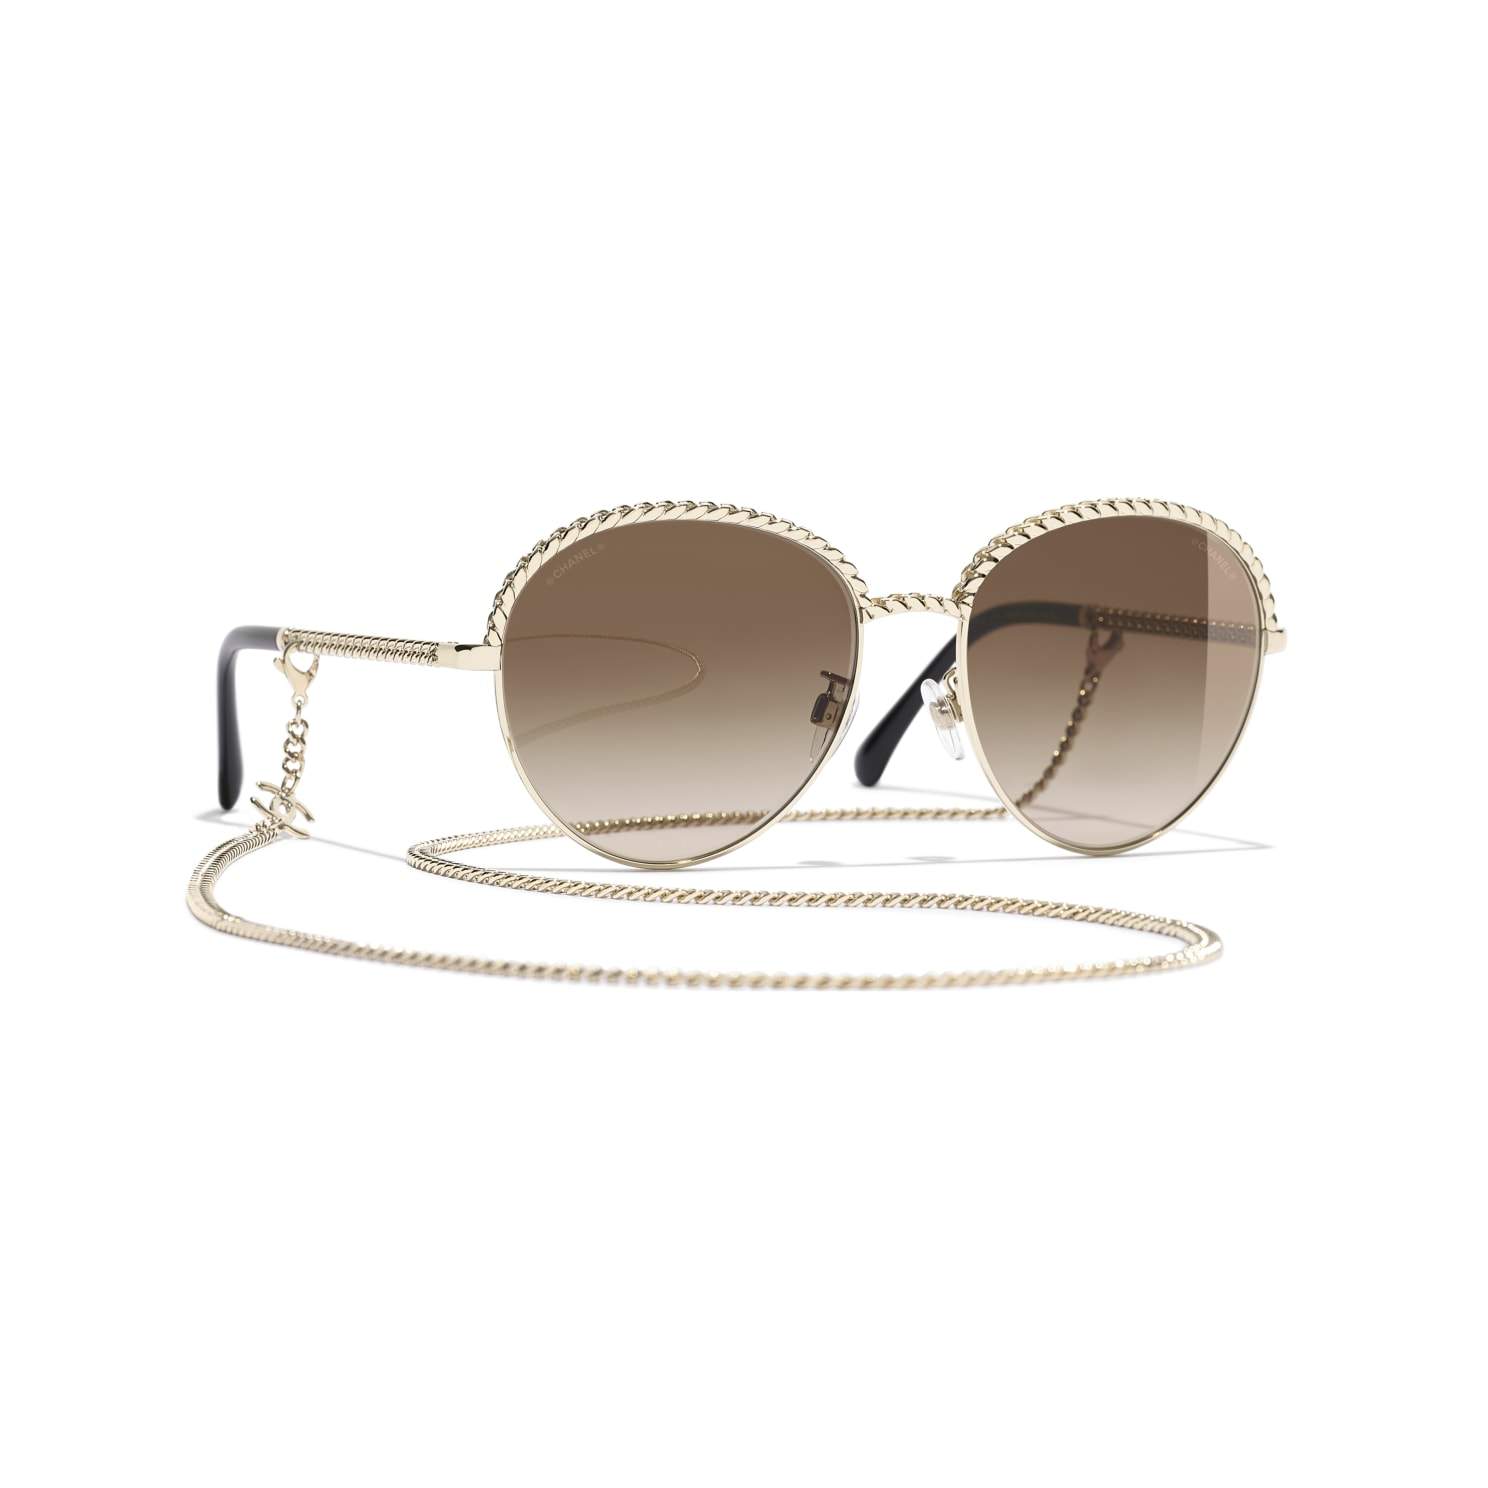 Sunglasses Chanel Chaîne Gold CH4242 C395/S5 55-17 Gradient in